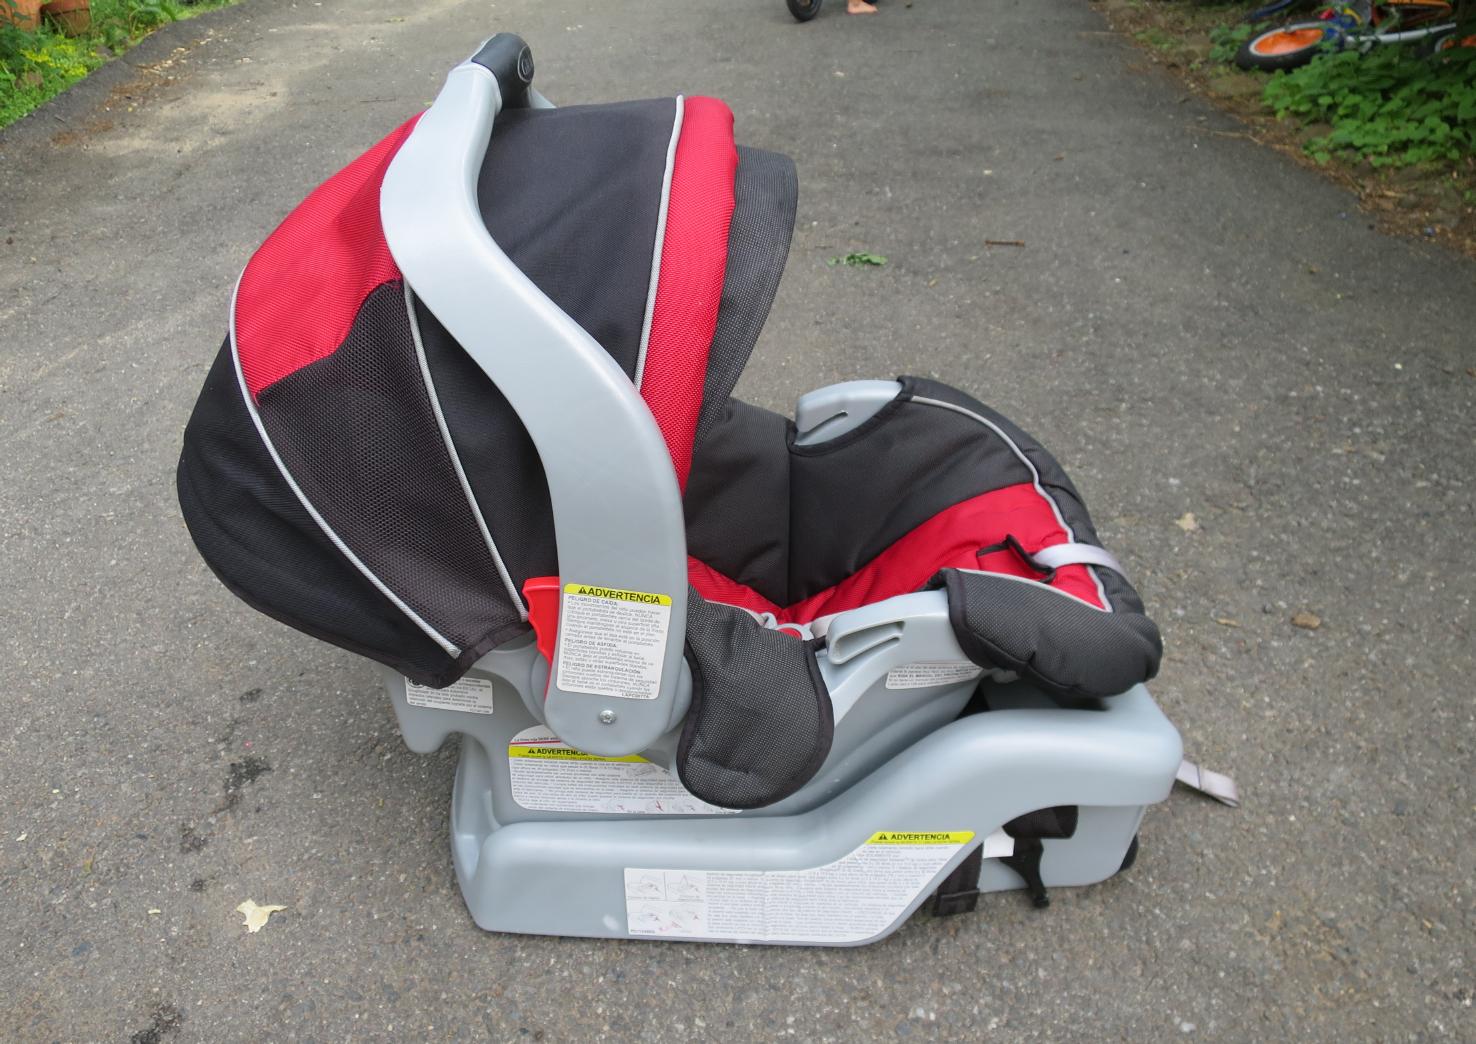 Graco Infant Seat